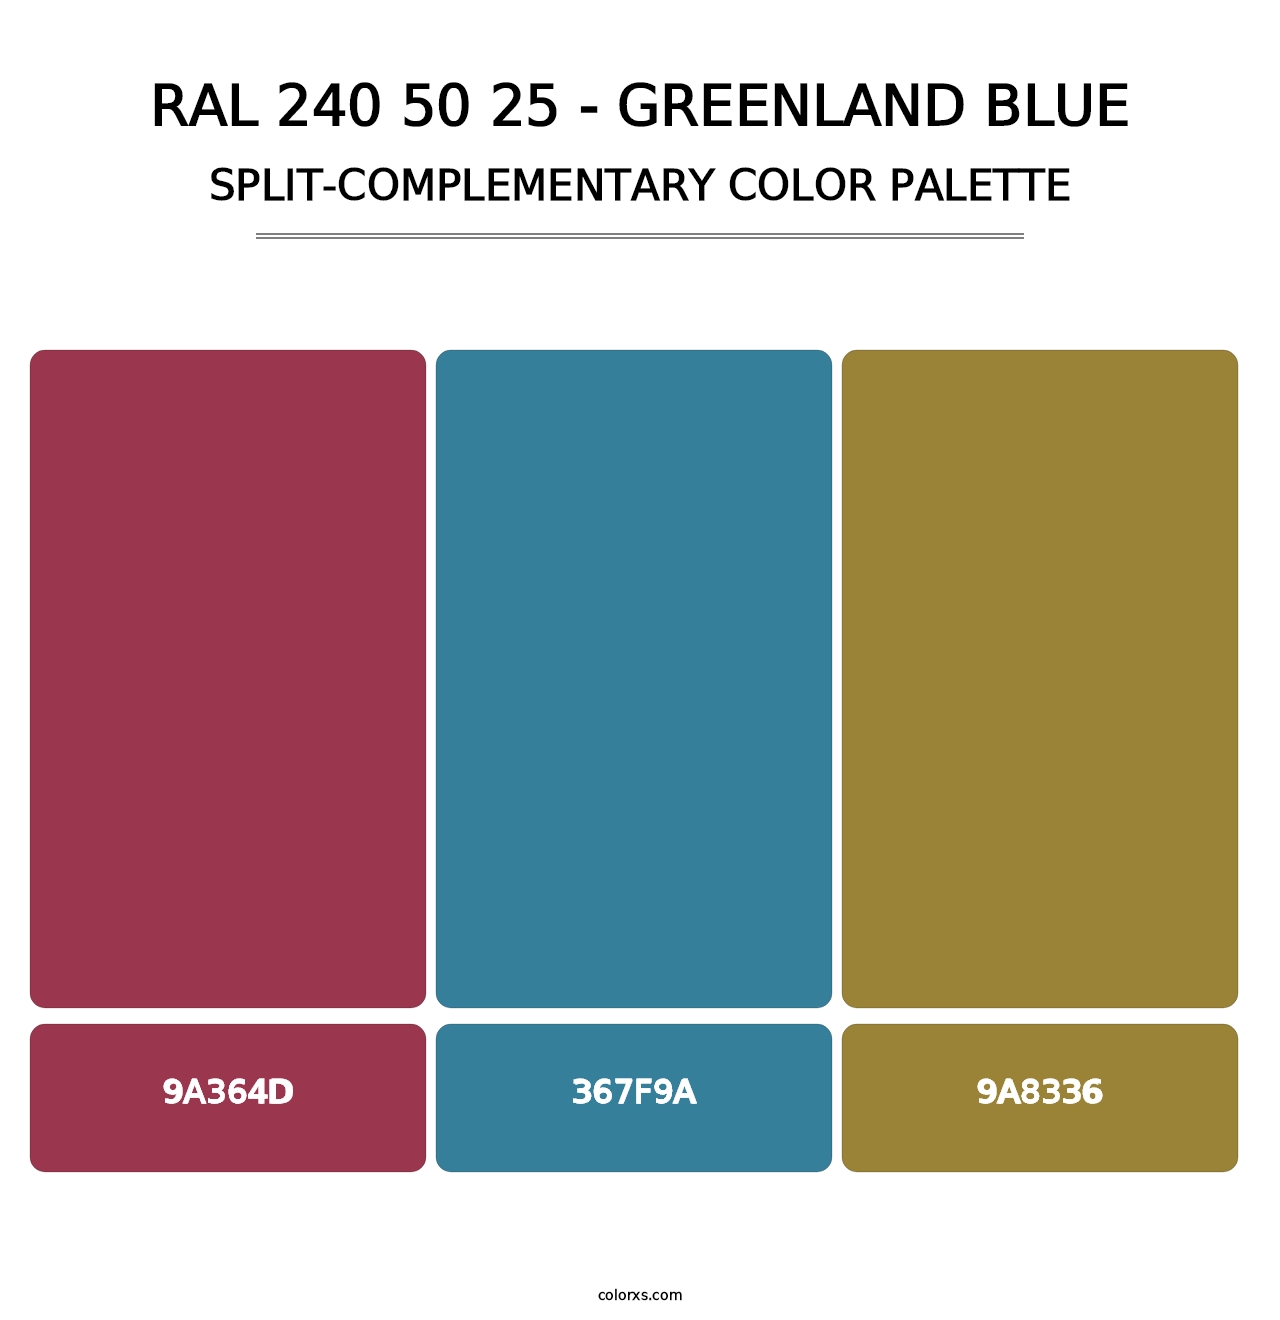 RAL 240 50 25 - Greenland Blue - Split-Complementary Color Palette